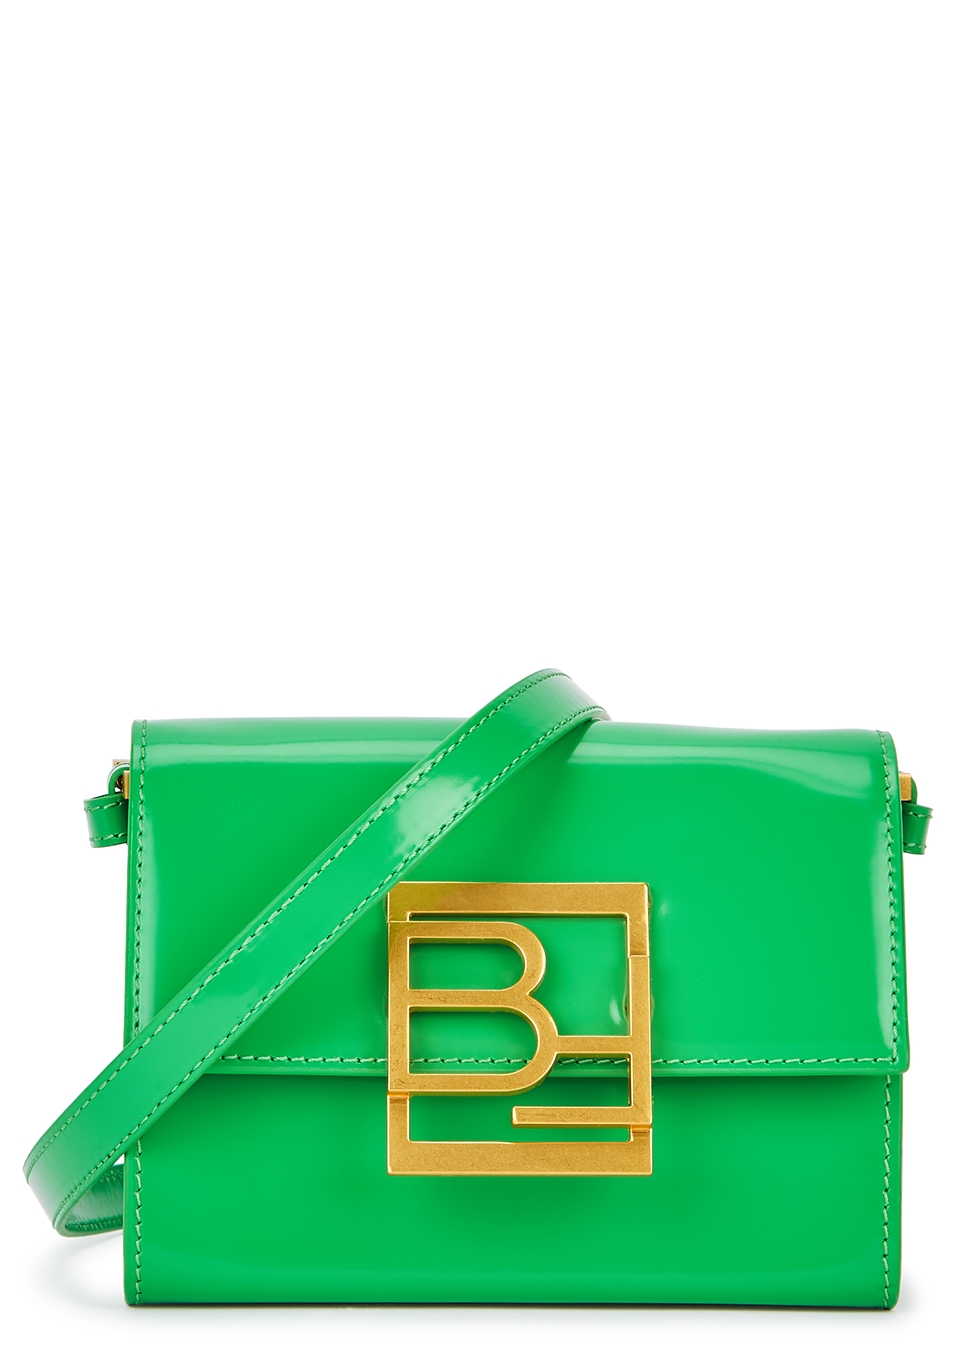 Fran green leather top handle bag